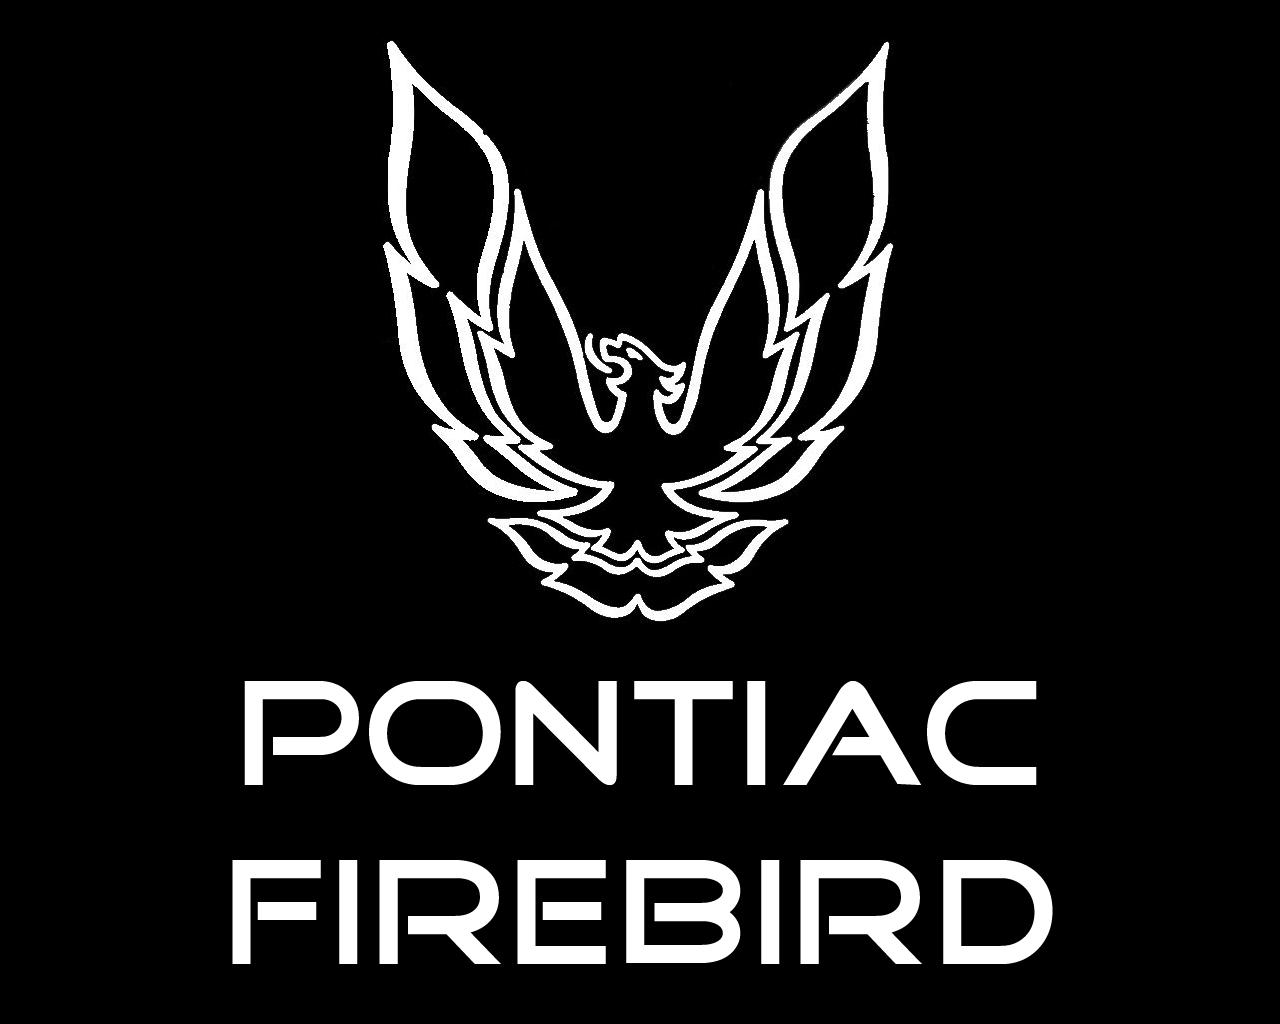 Firebird Logo Wallpaper Request Please Generation F Body Message Boards